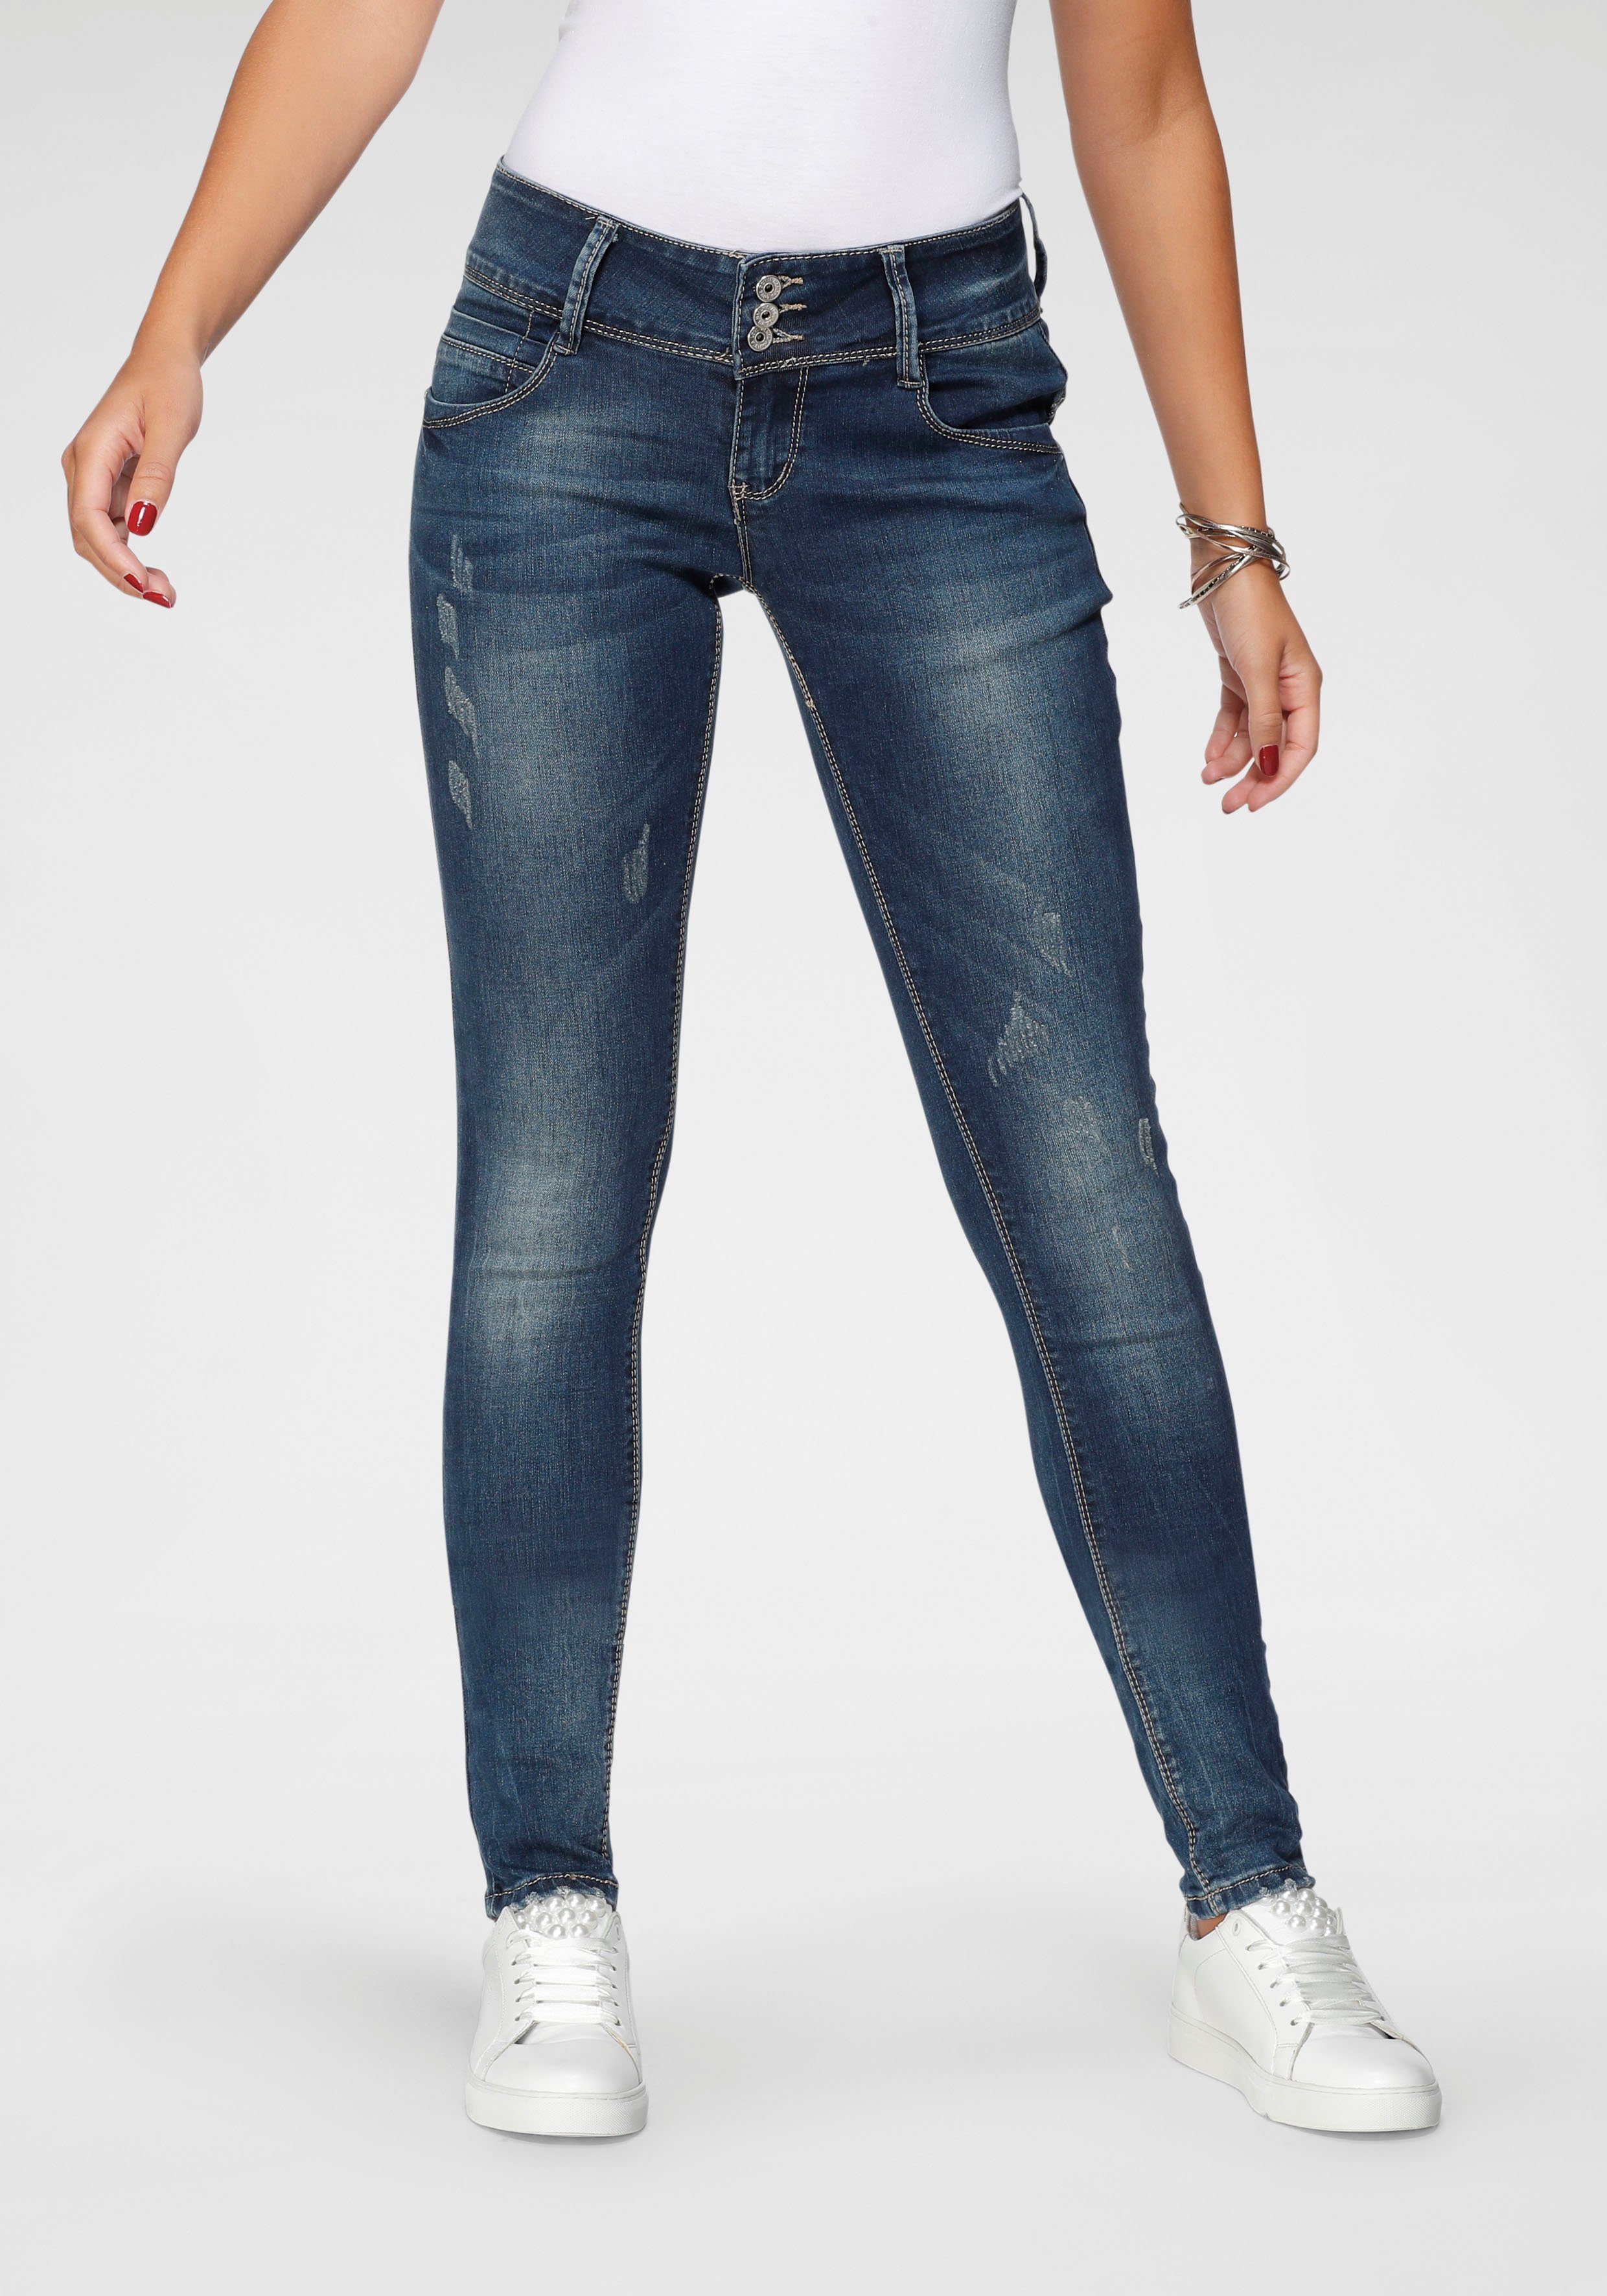 HaILY’S CAMILA Skinny-fit-Jeans darkblue